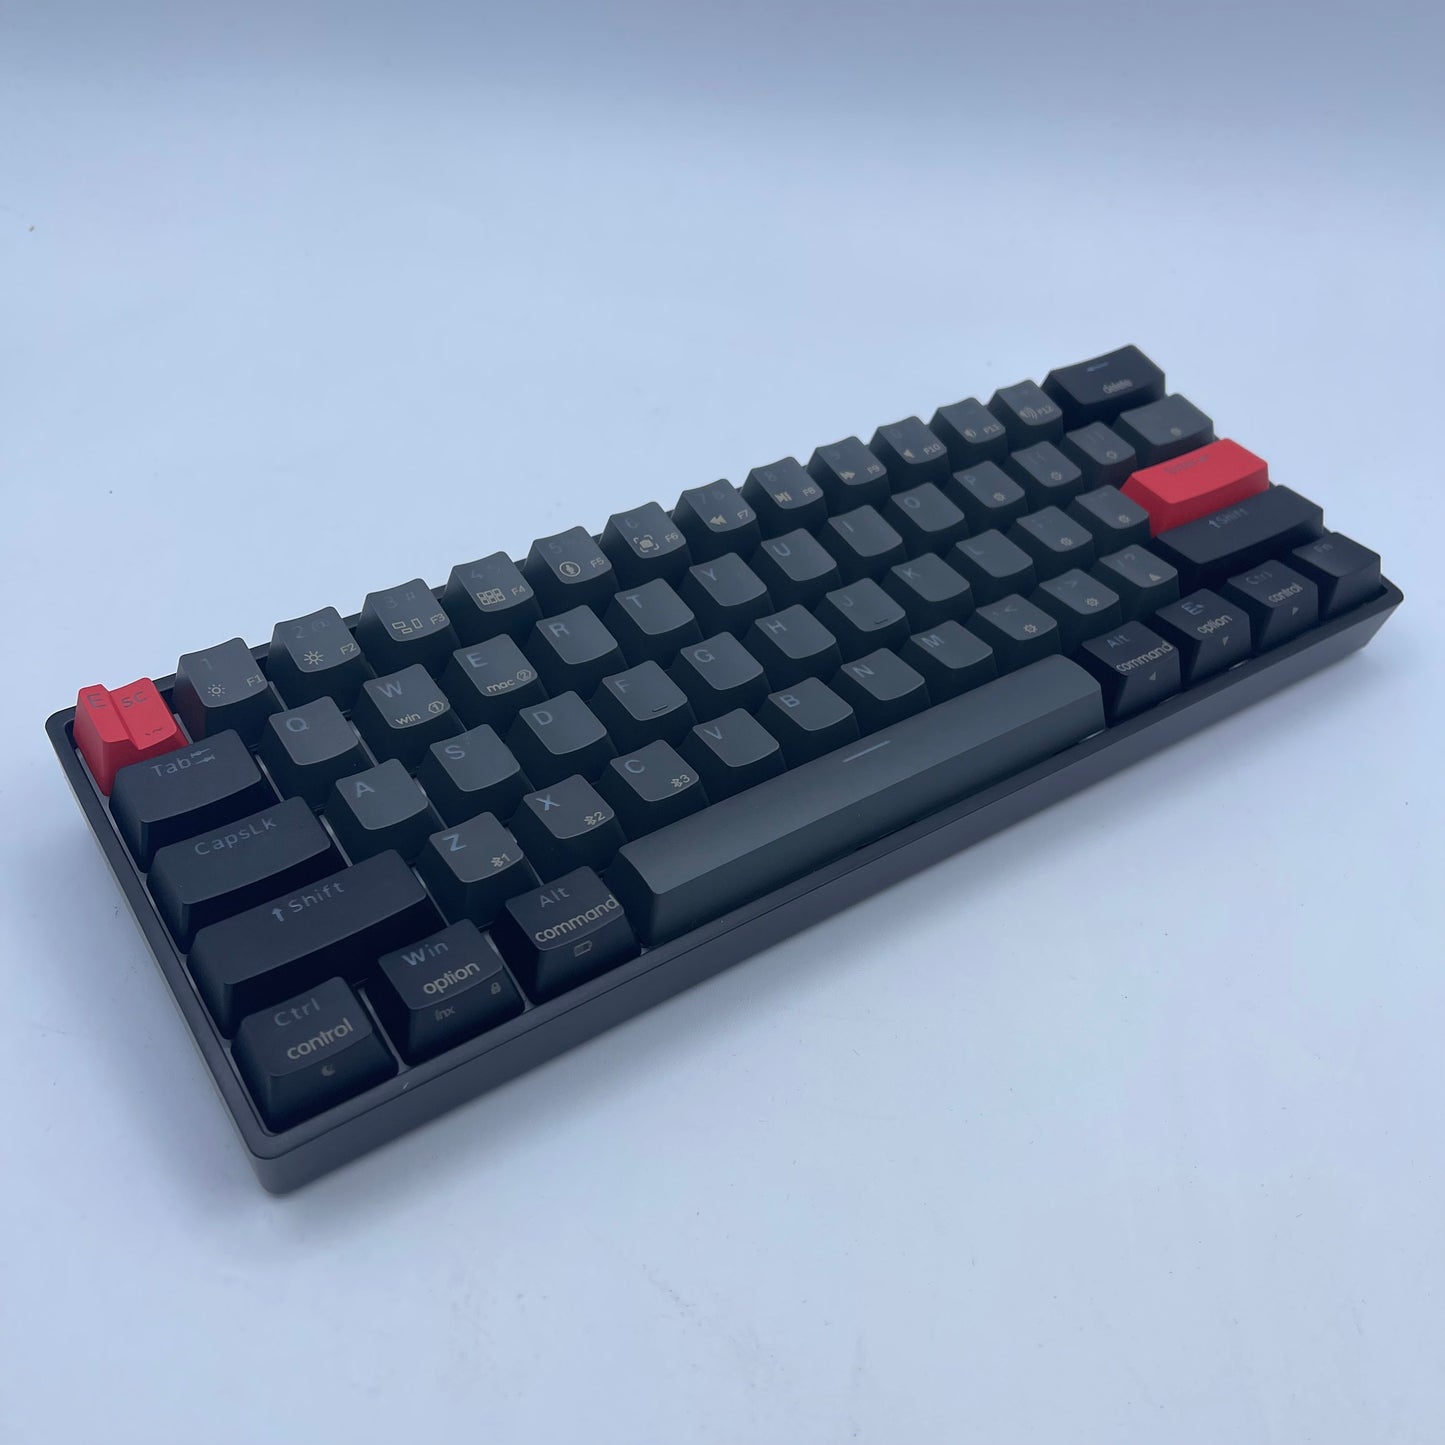 SkyLoong SK61S 61 Keys Hot Swappable RGB Mechanical Keyboard RGB Grey Black & Red